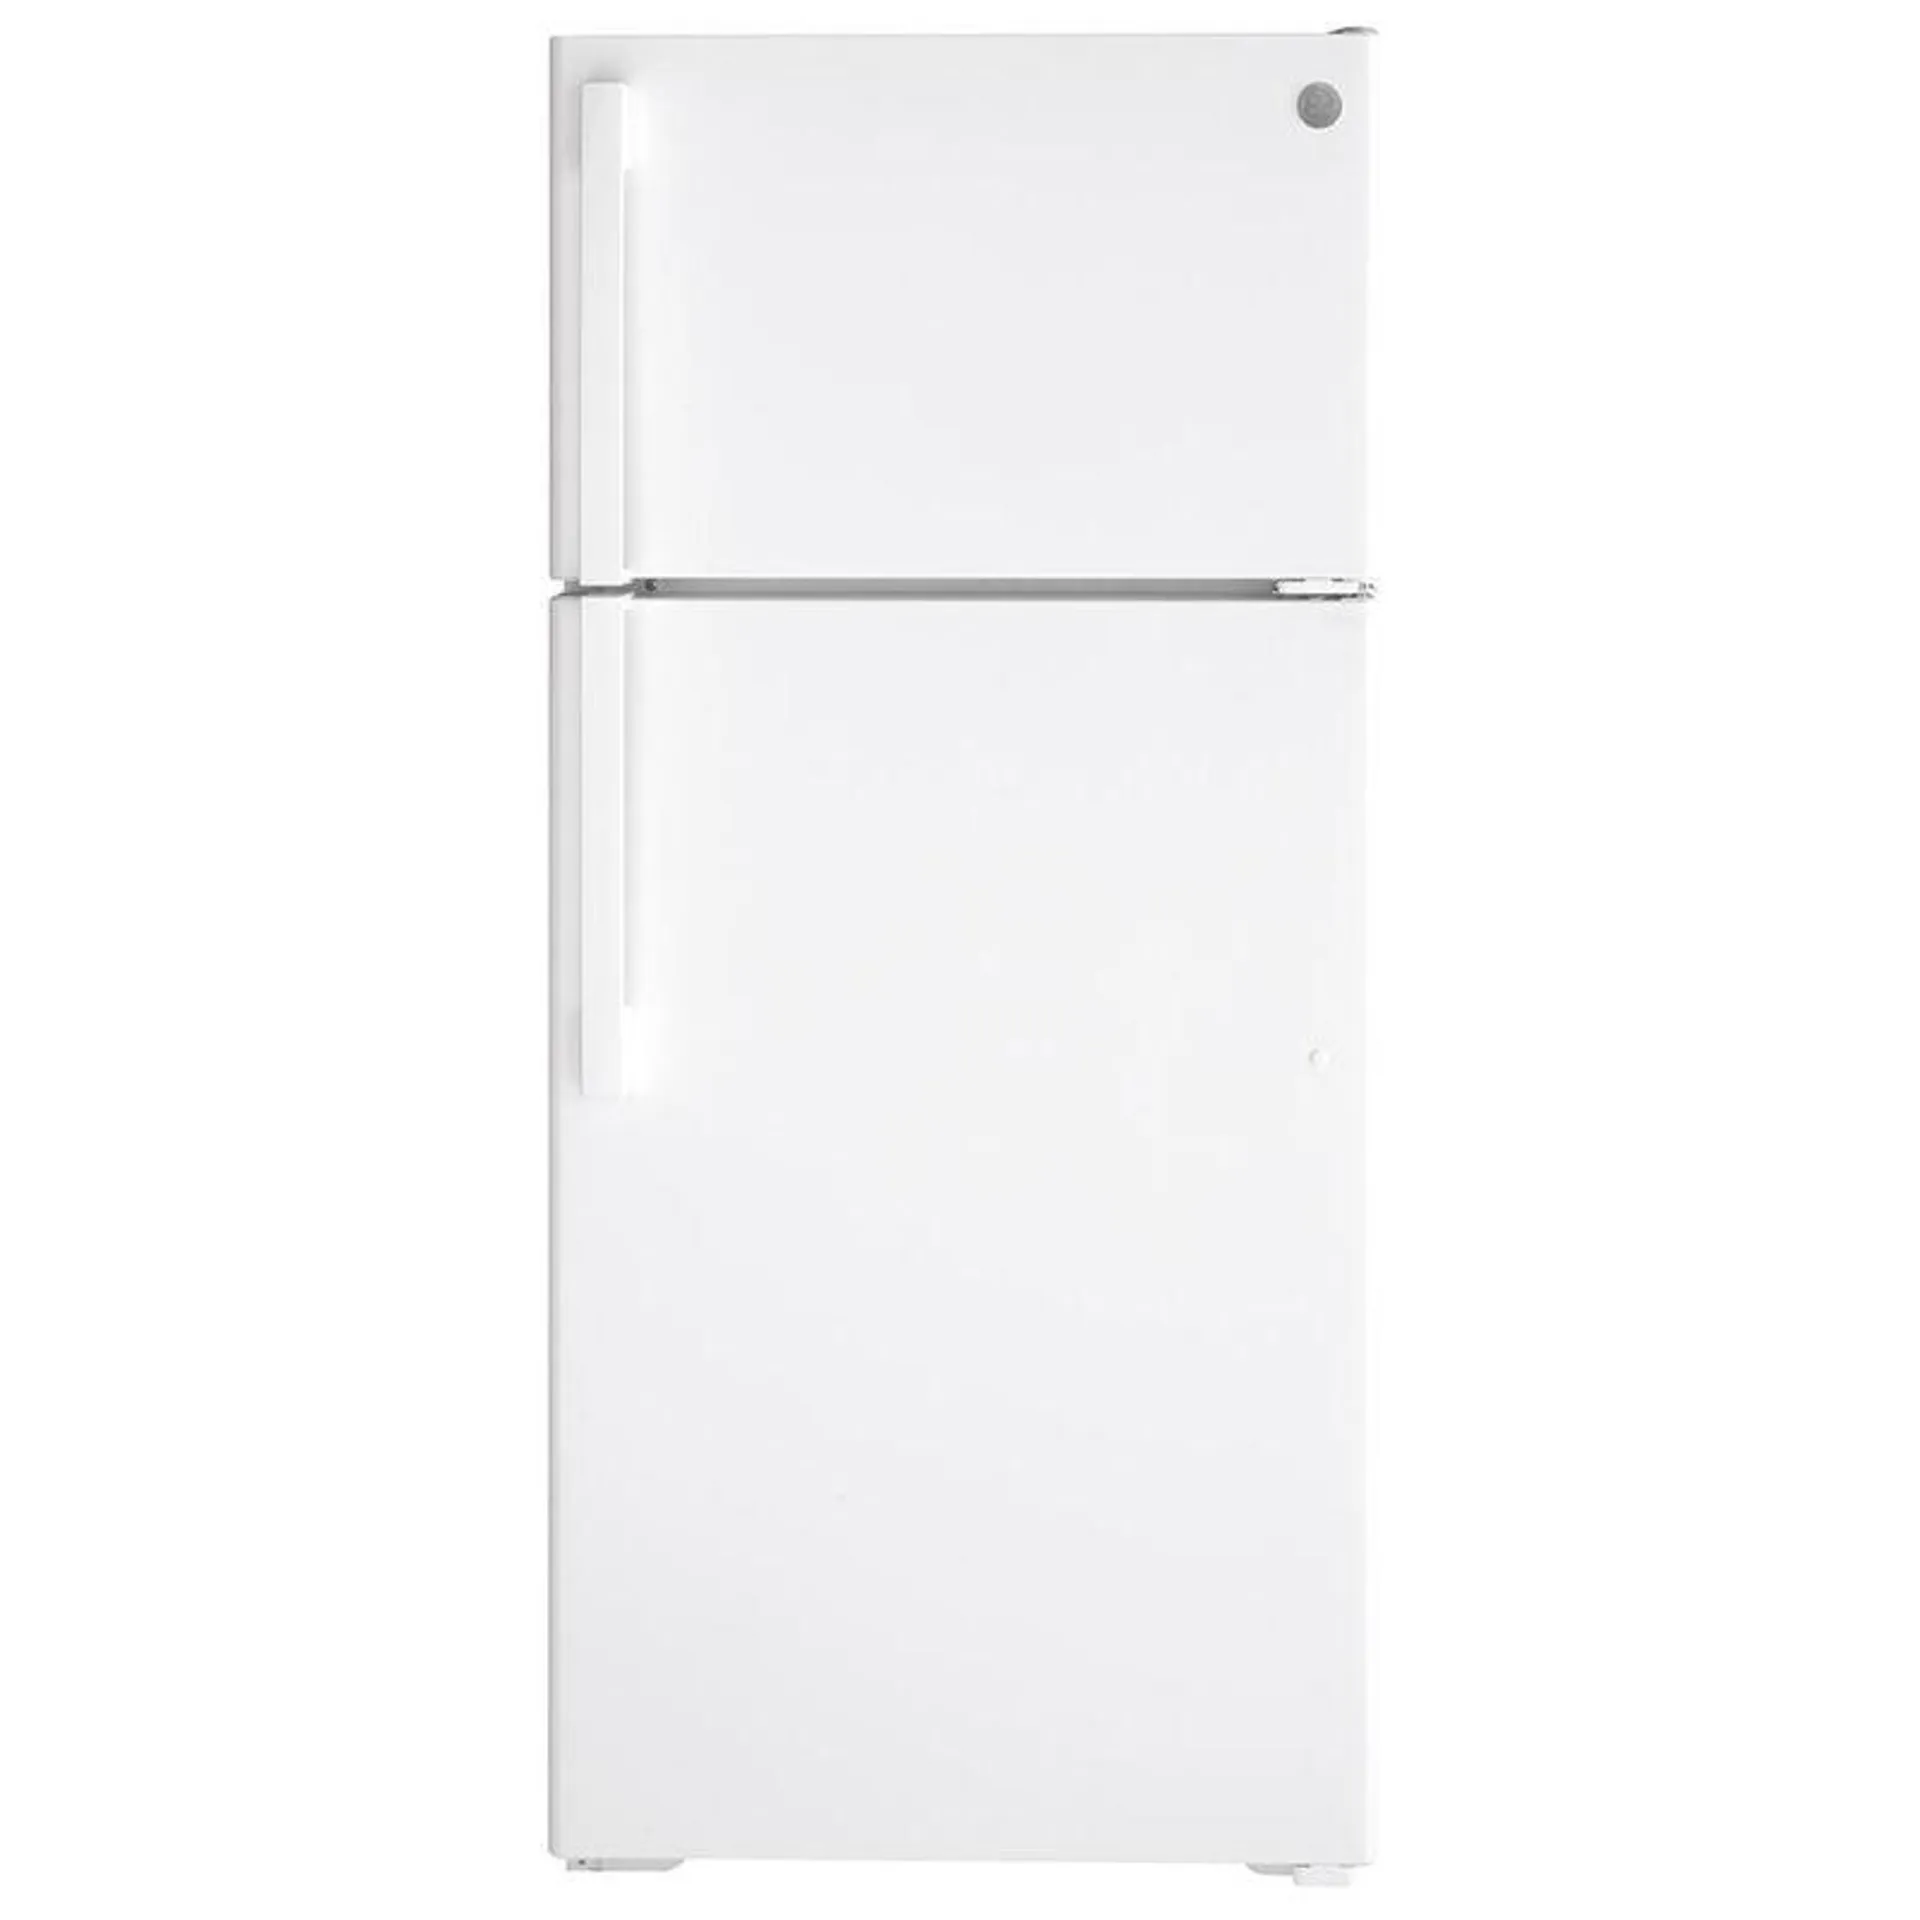 GE 28 in. 16.6 cu. ft. Top Freezer Refrigerator - White